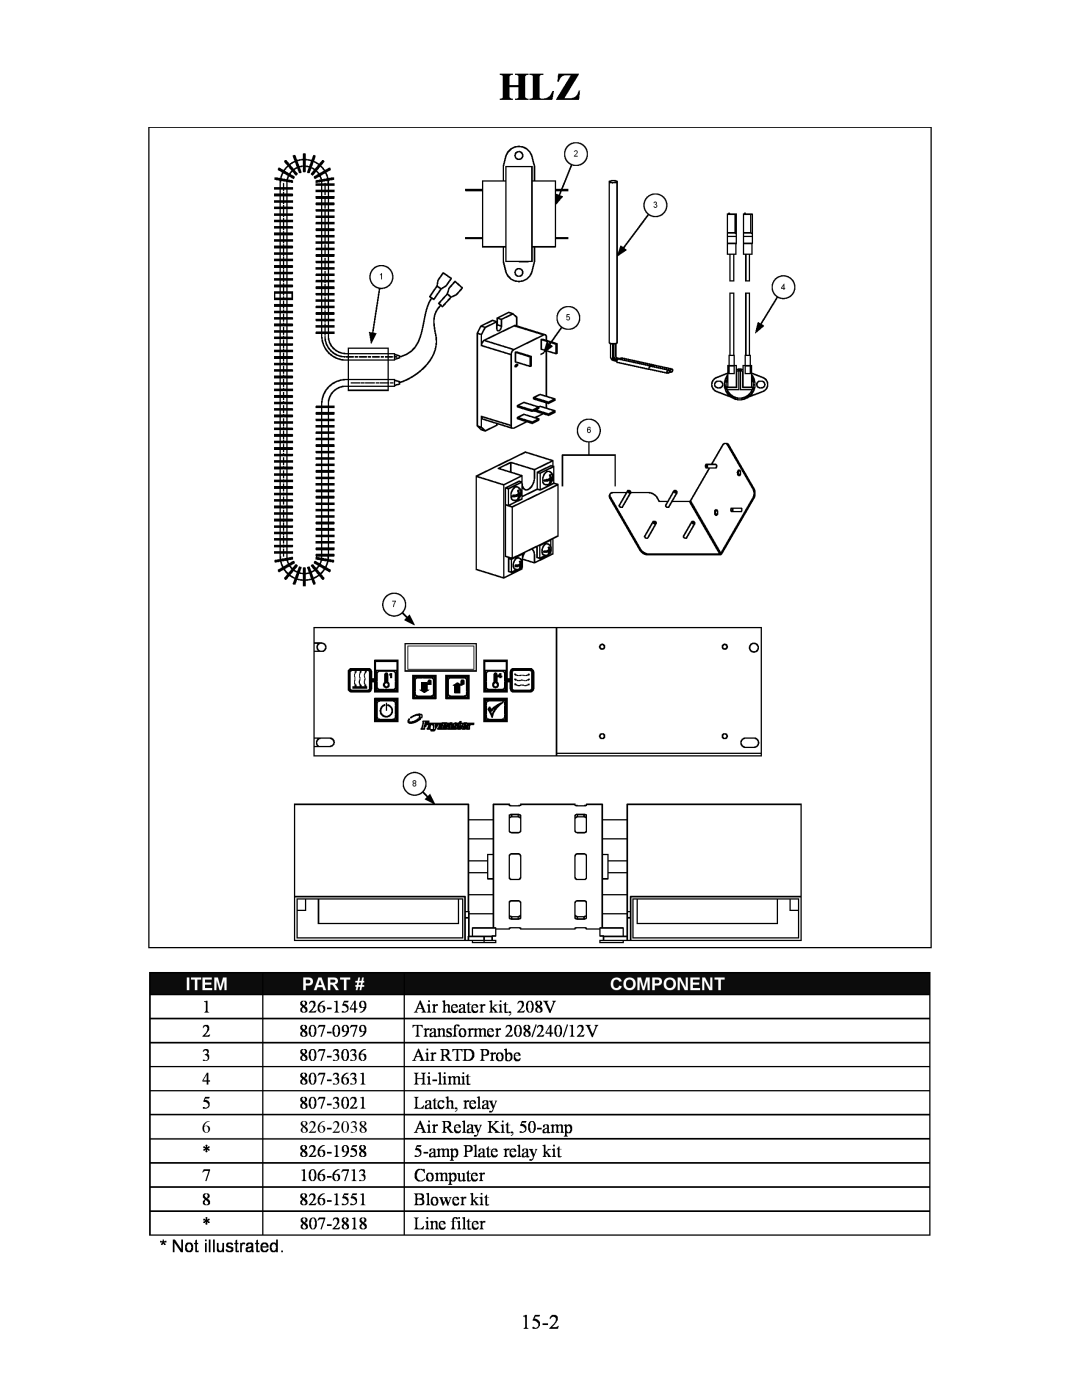 Frymaster H50 manual 15-2, Part #, Component 